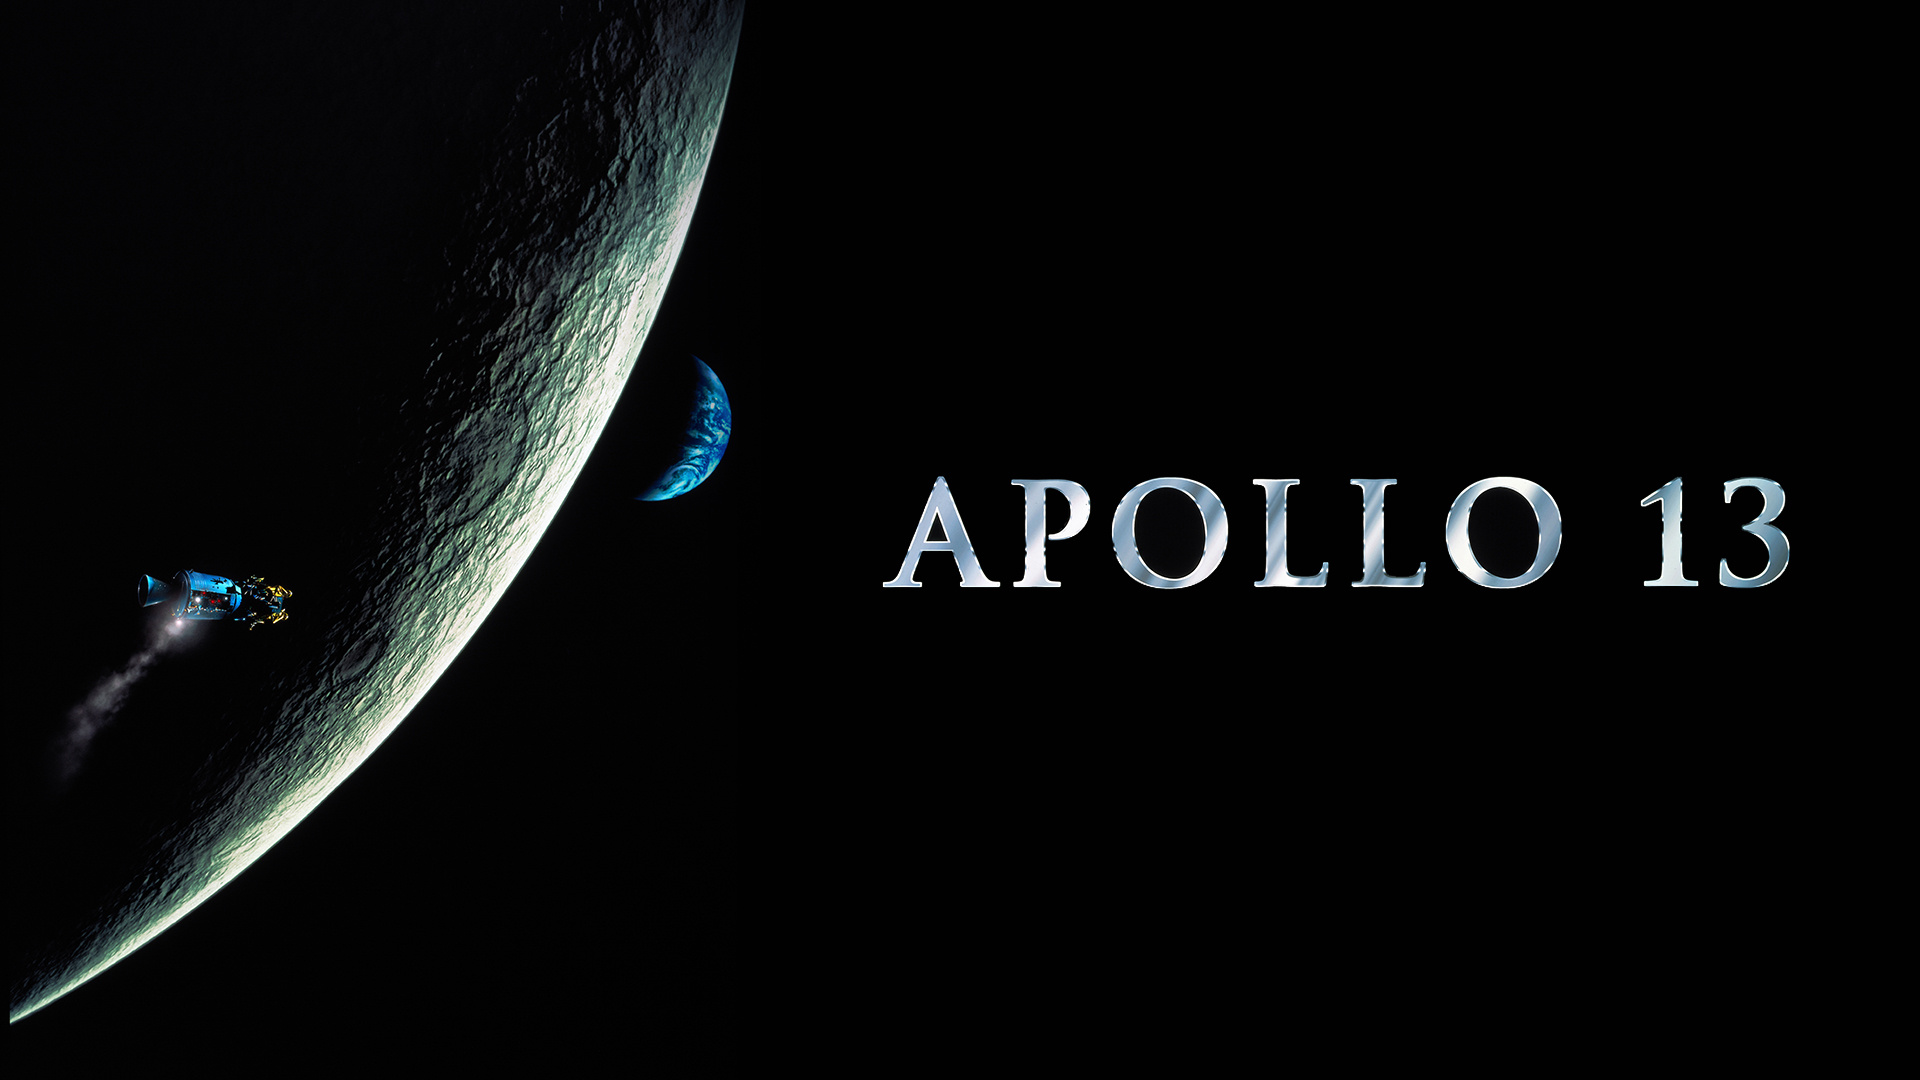 Apollo 13, Astronaut's journey, Space mission, True story, 1920x1080 Full HD Desktop